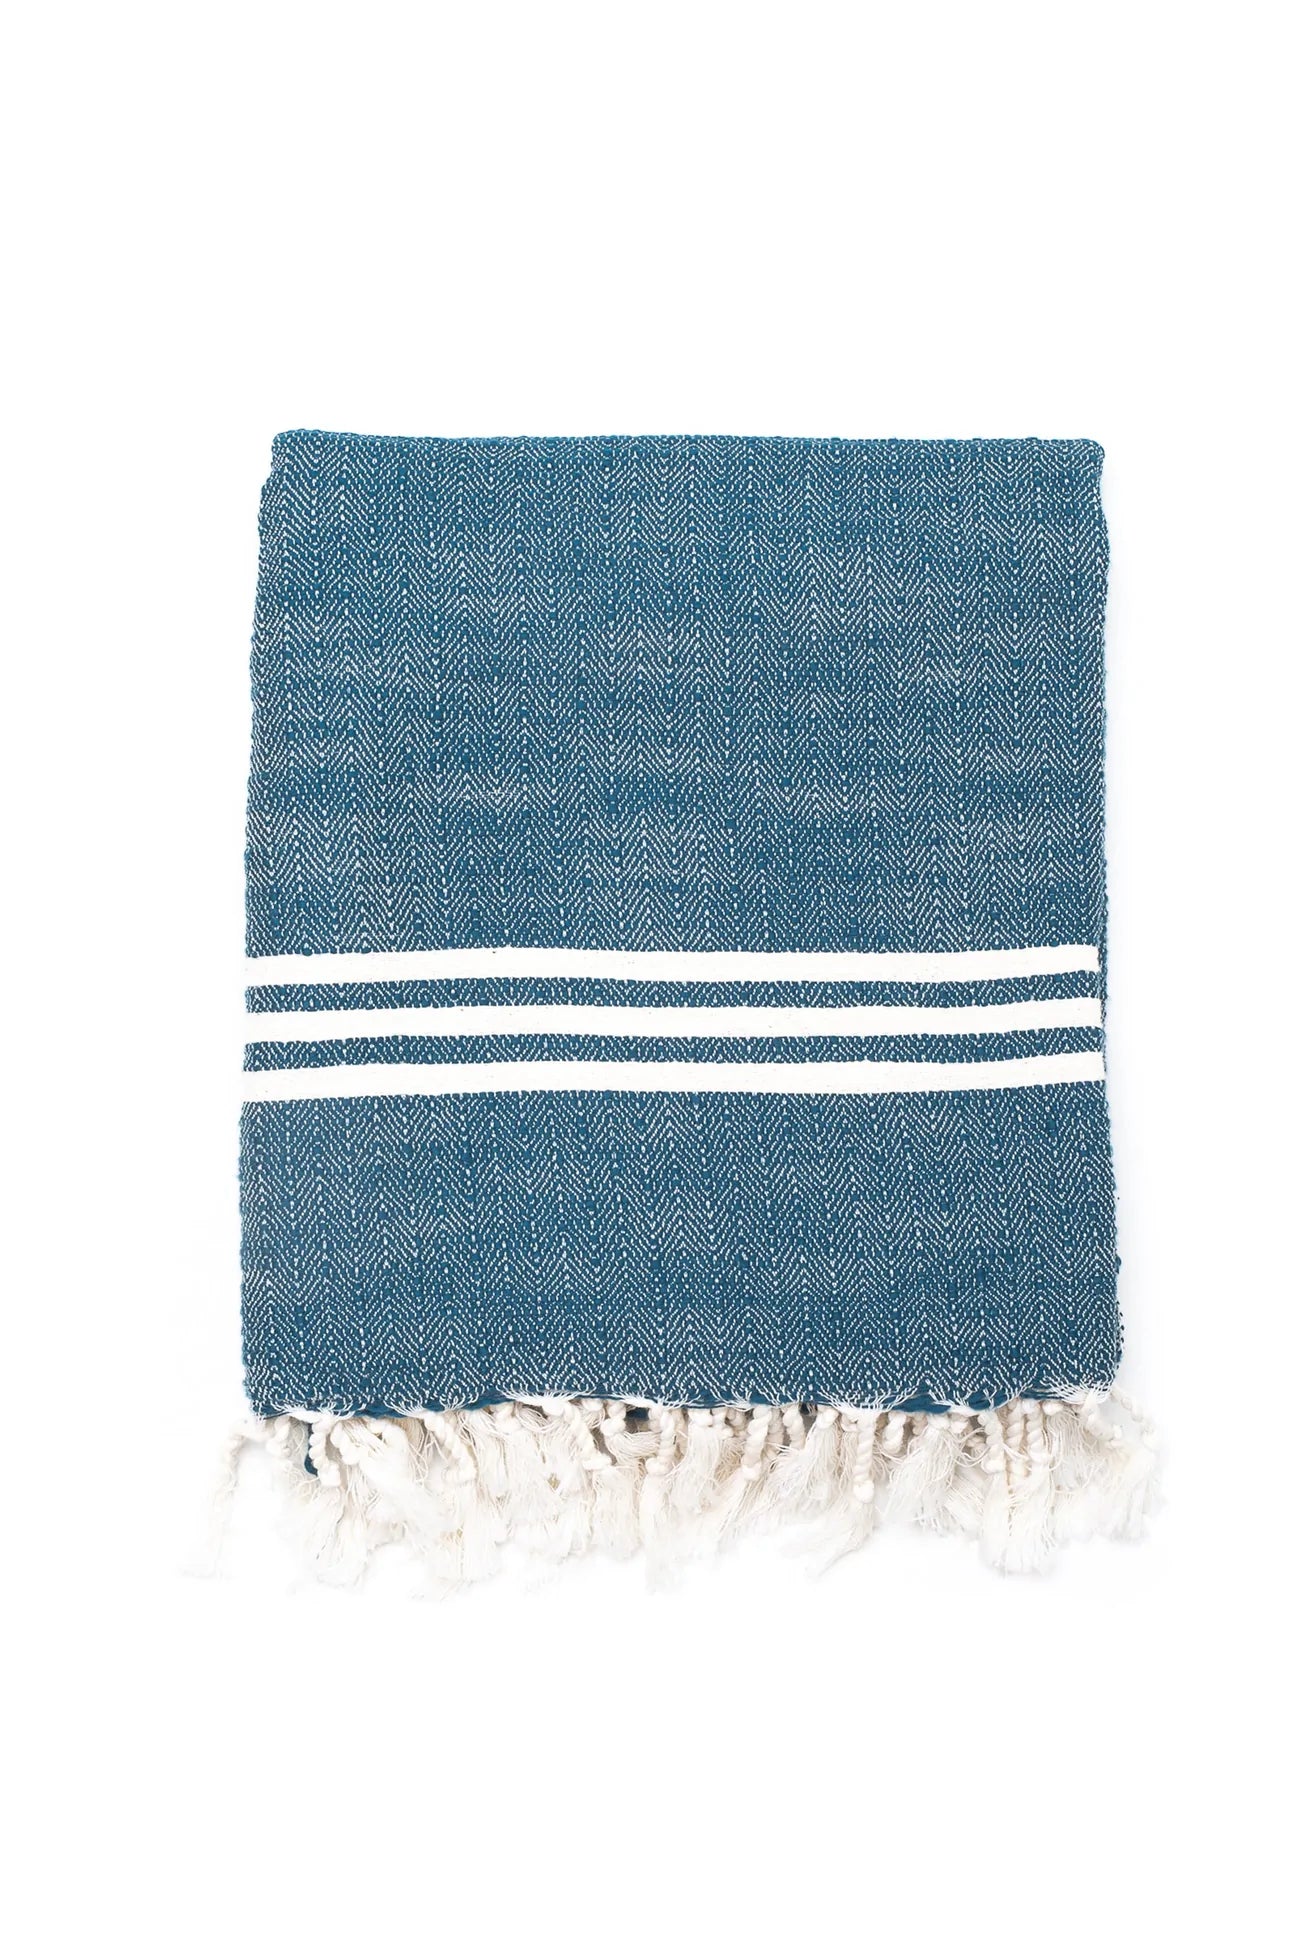 Sima Towel - Deep Blue